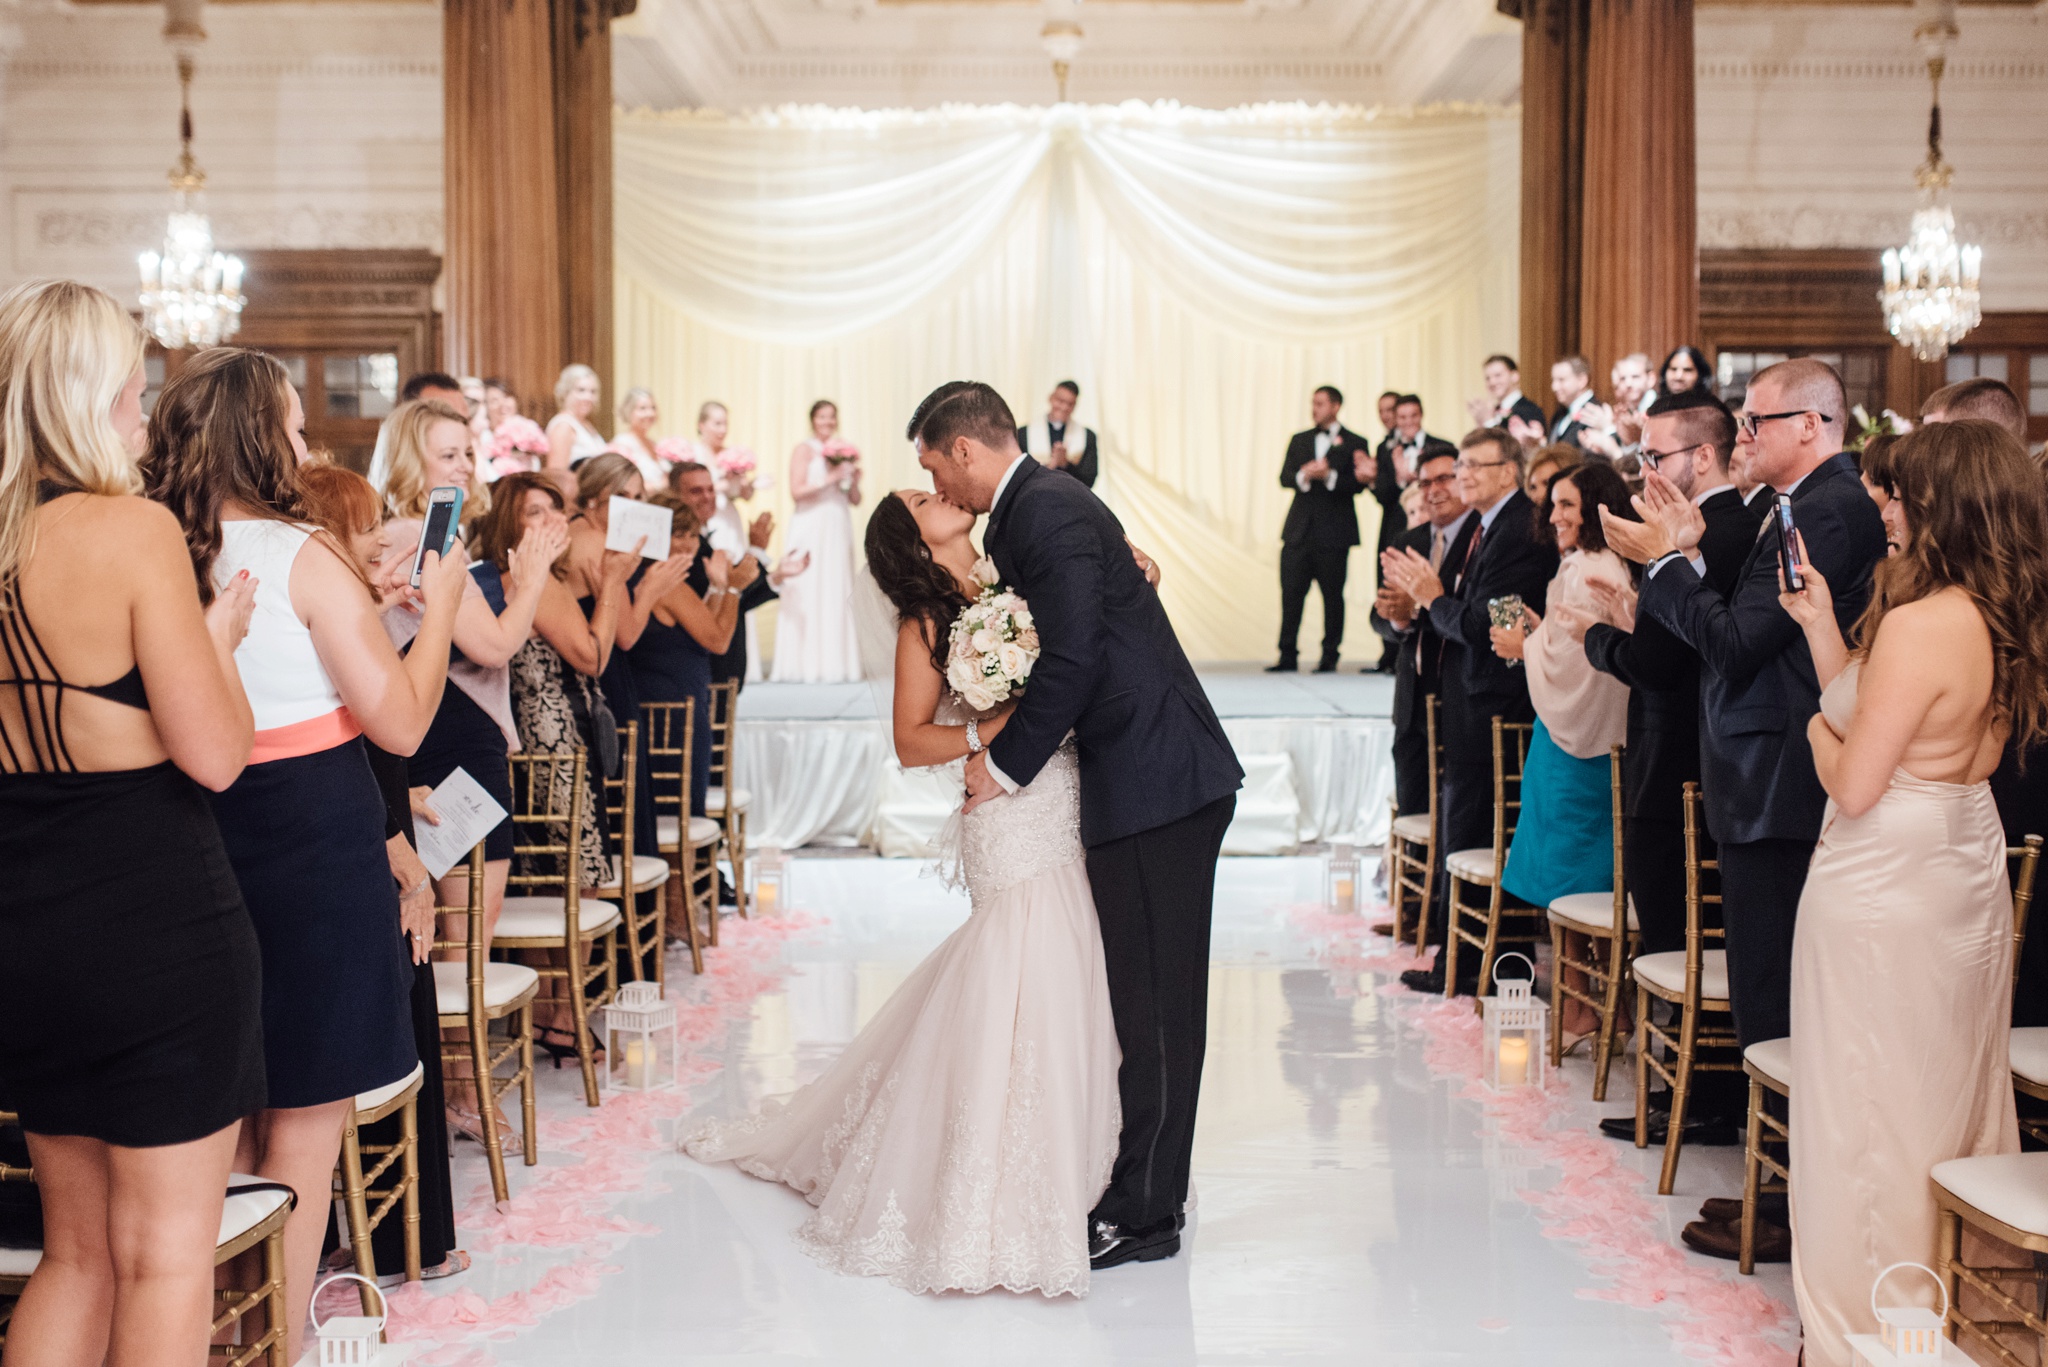 Stephanie + Justin - Crystal Tea Room Wedding Ceremony - Philadelphia Wedding Photographer - Alison Dunn Photography photo